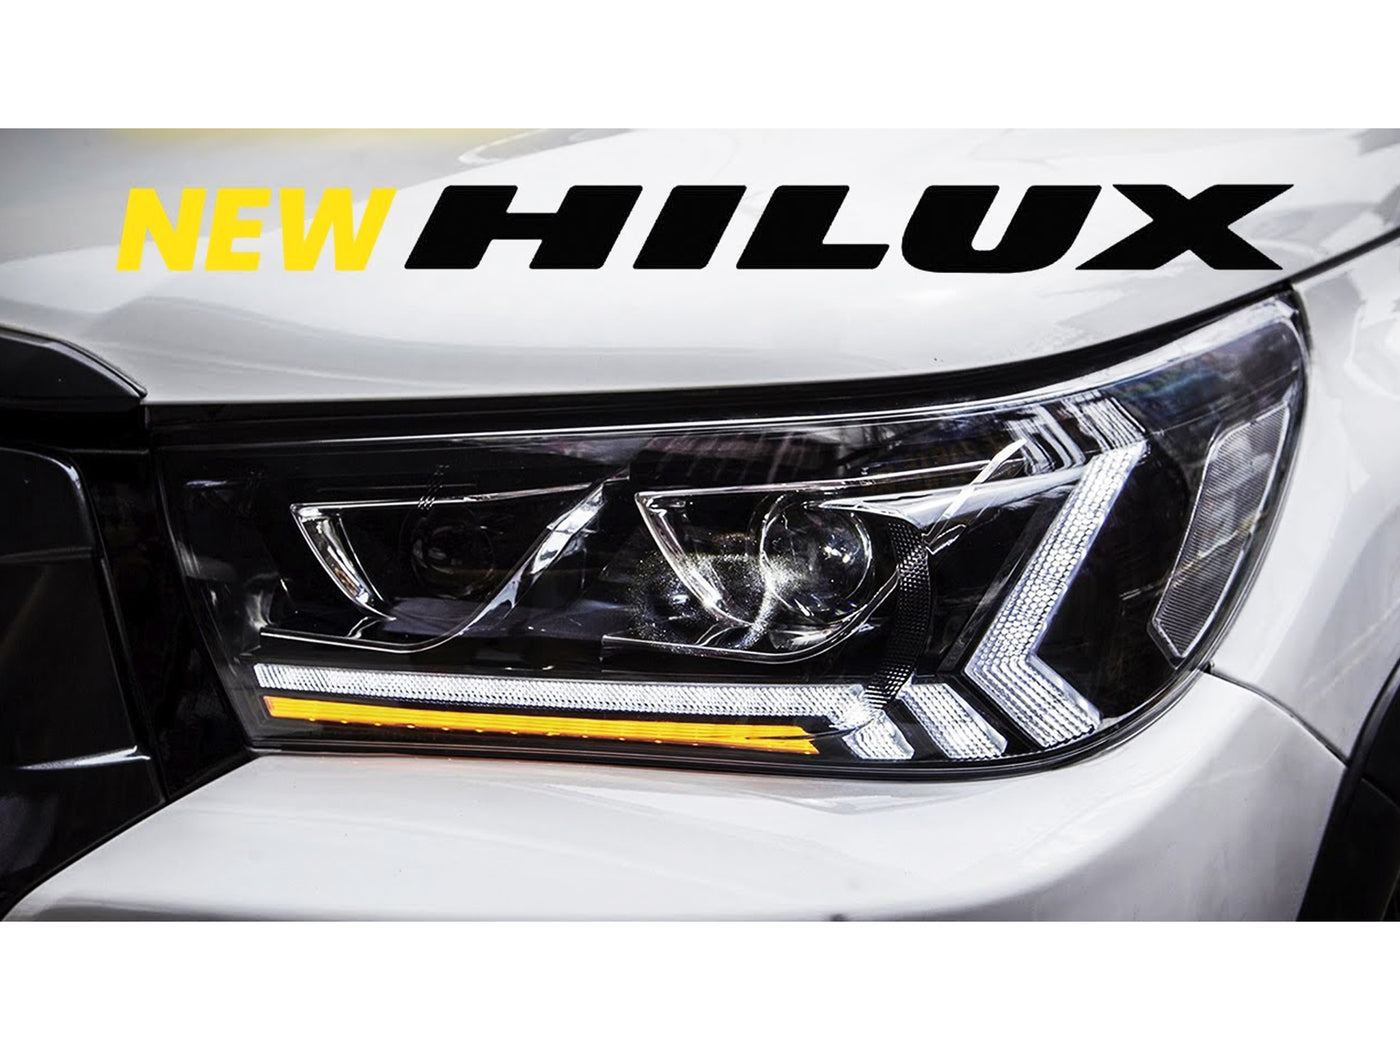 Farolas Led Drl Tipo Dubai Deluxe para Toyota Hilux 2017-2020